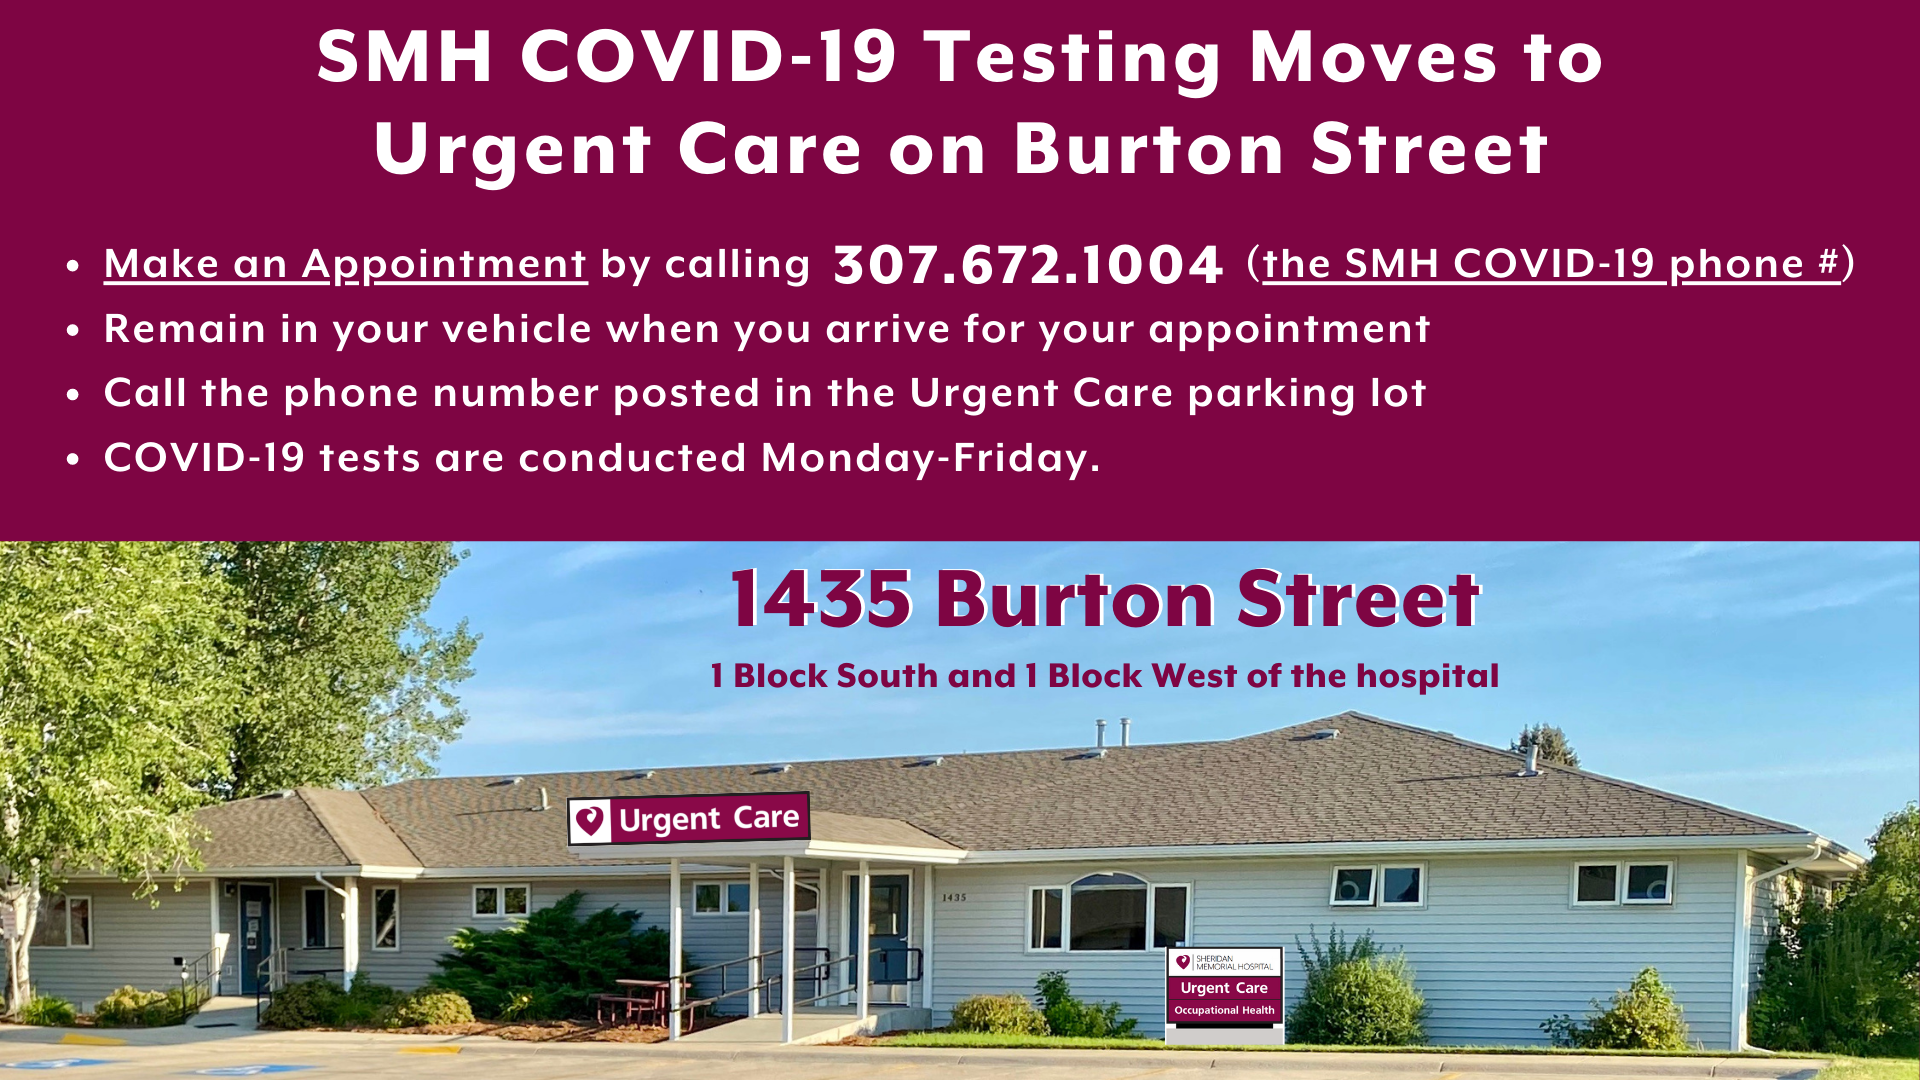 SMH COVID-19 Testing moves to Urgent Care on Burton Street - Sheridan